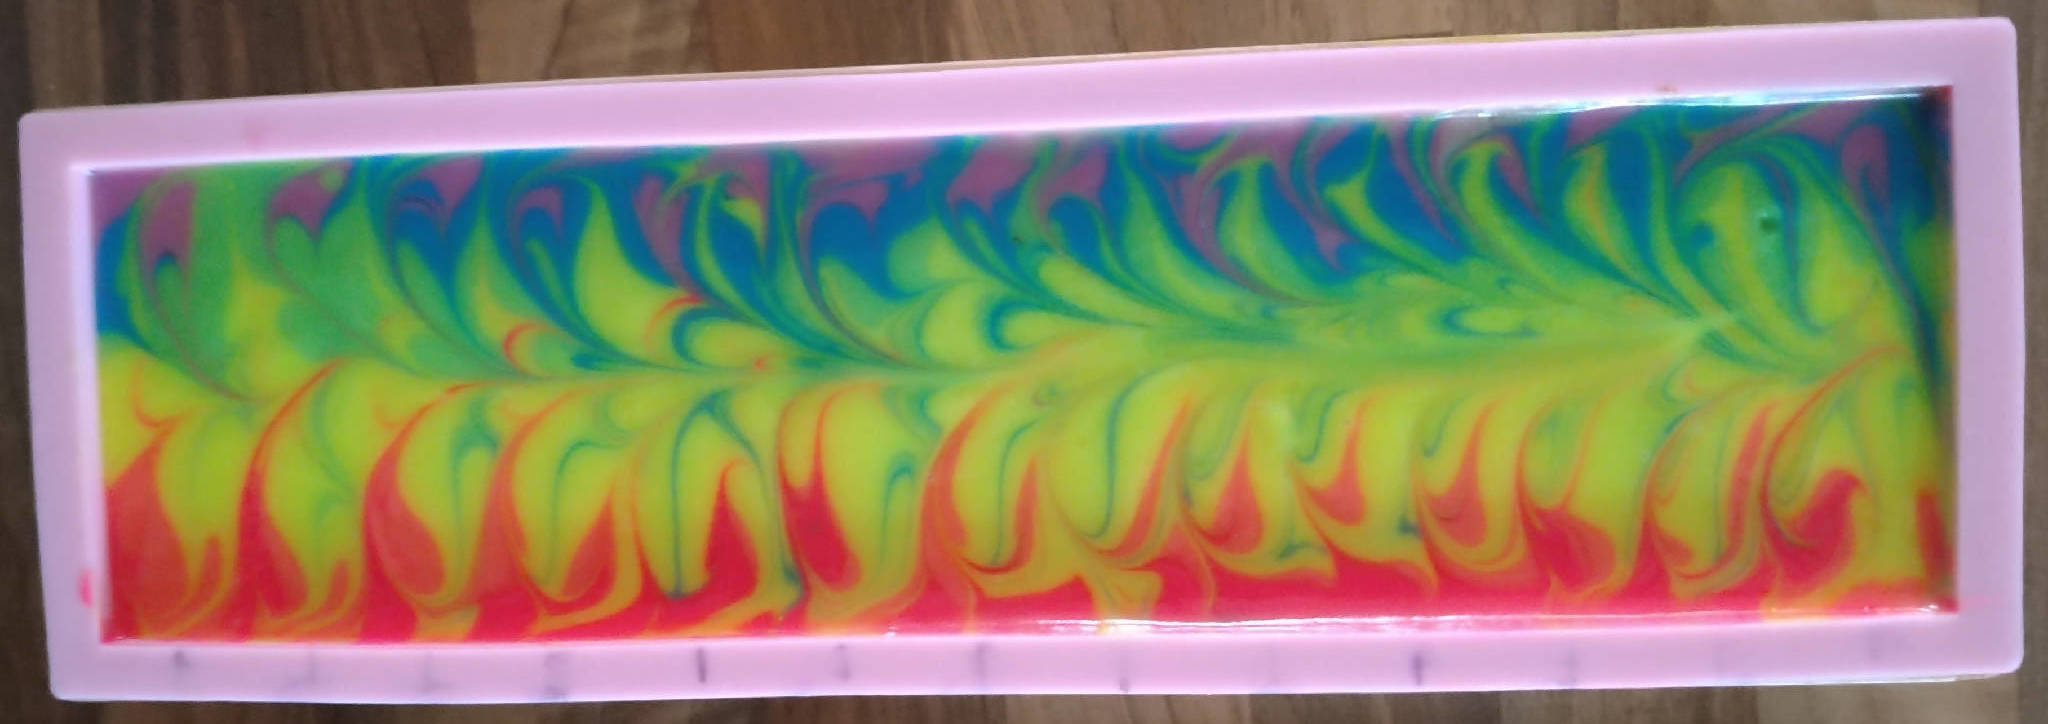 The Midnight Rainbow soap